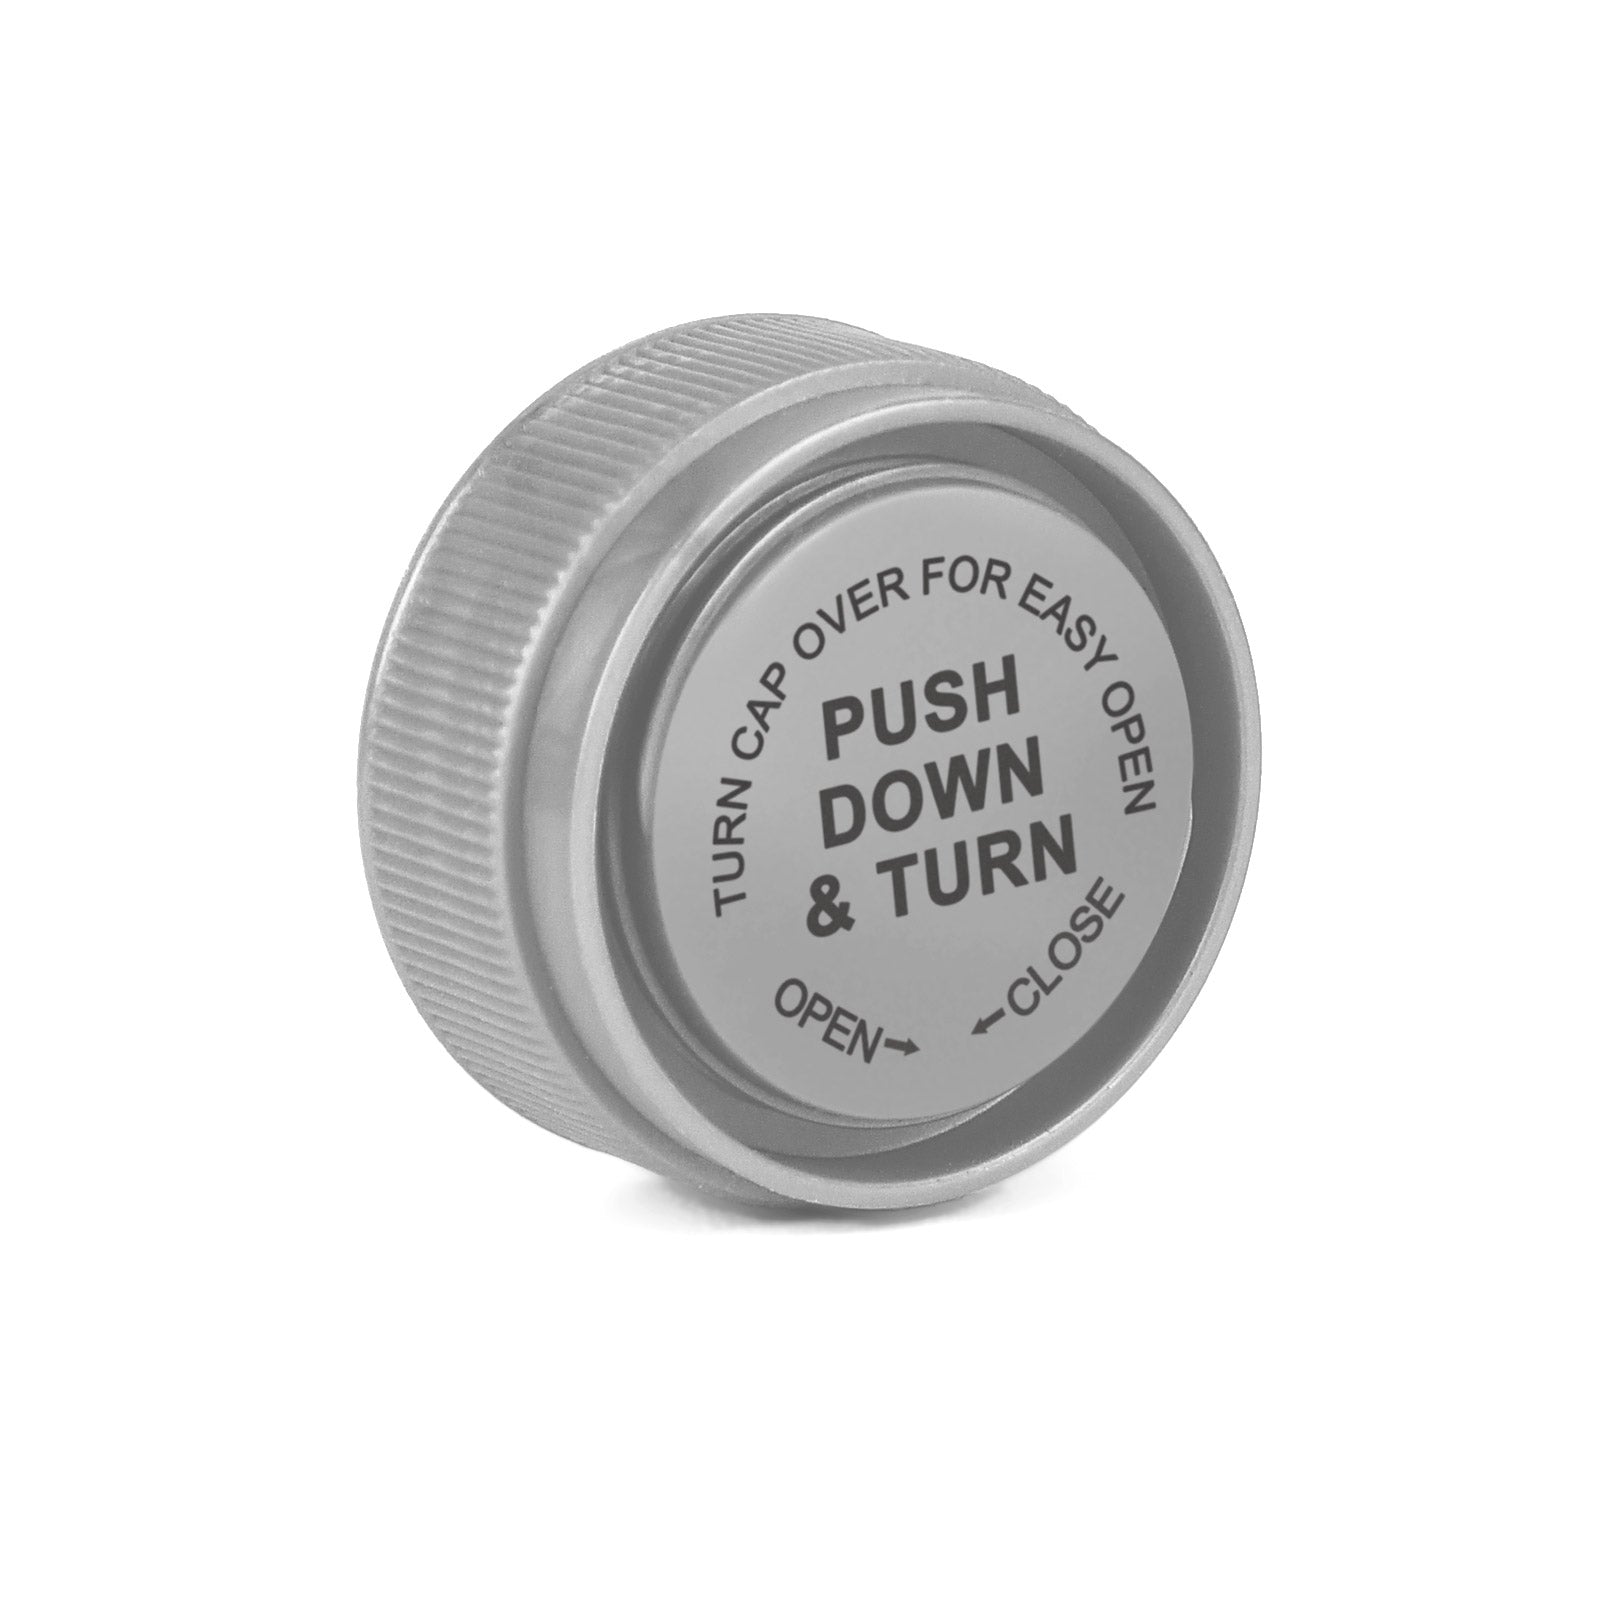 8 Dram Reversible Cap Opaque Silver - 410 Count